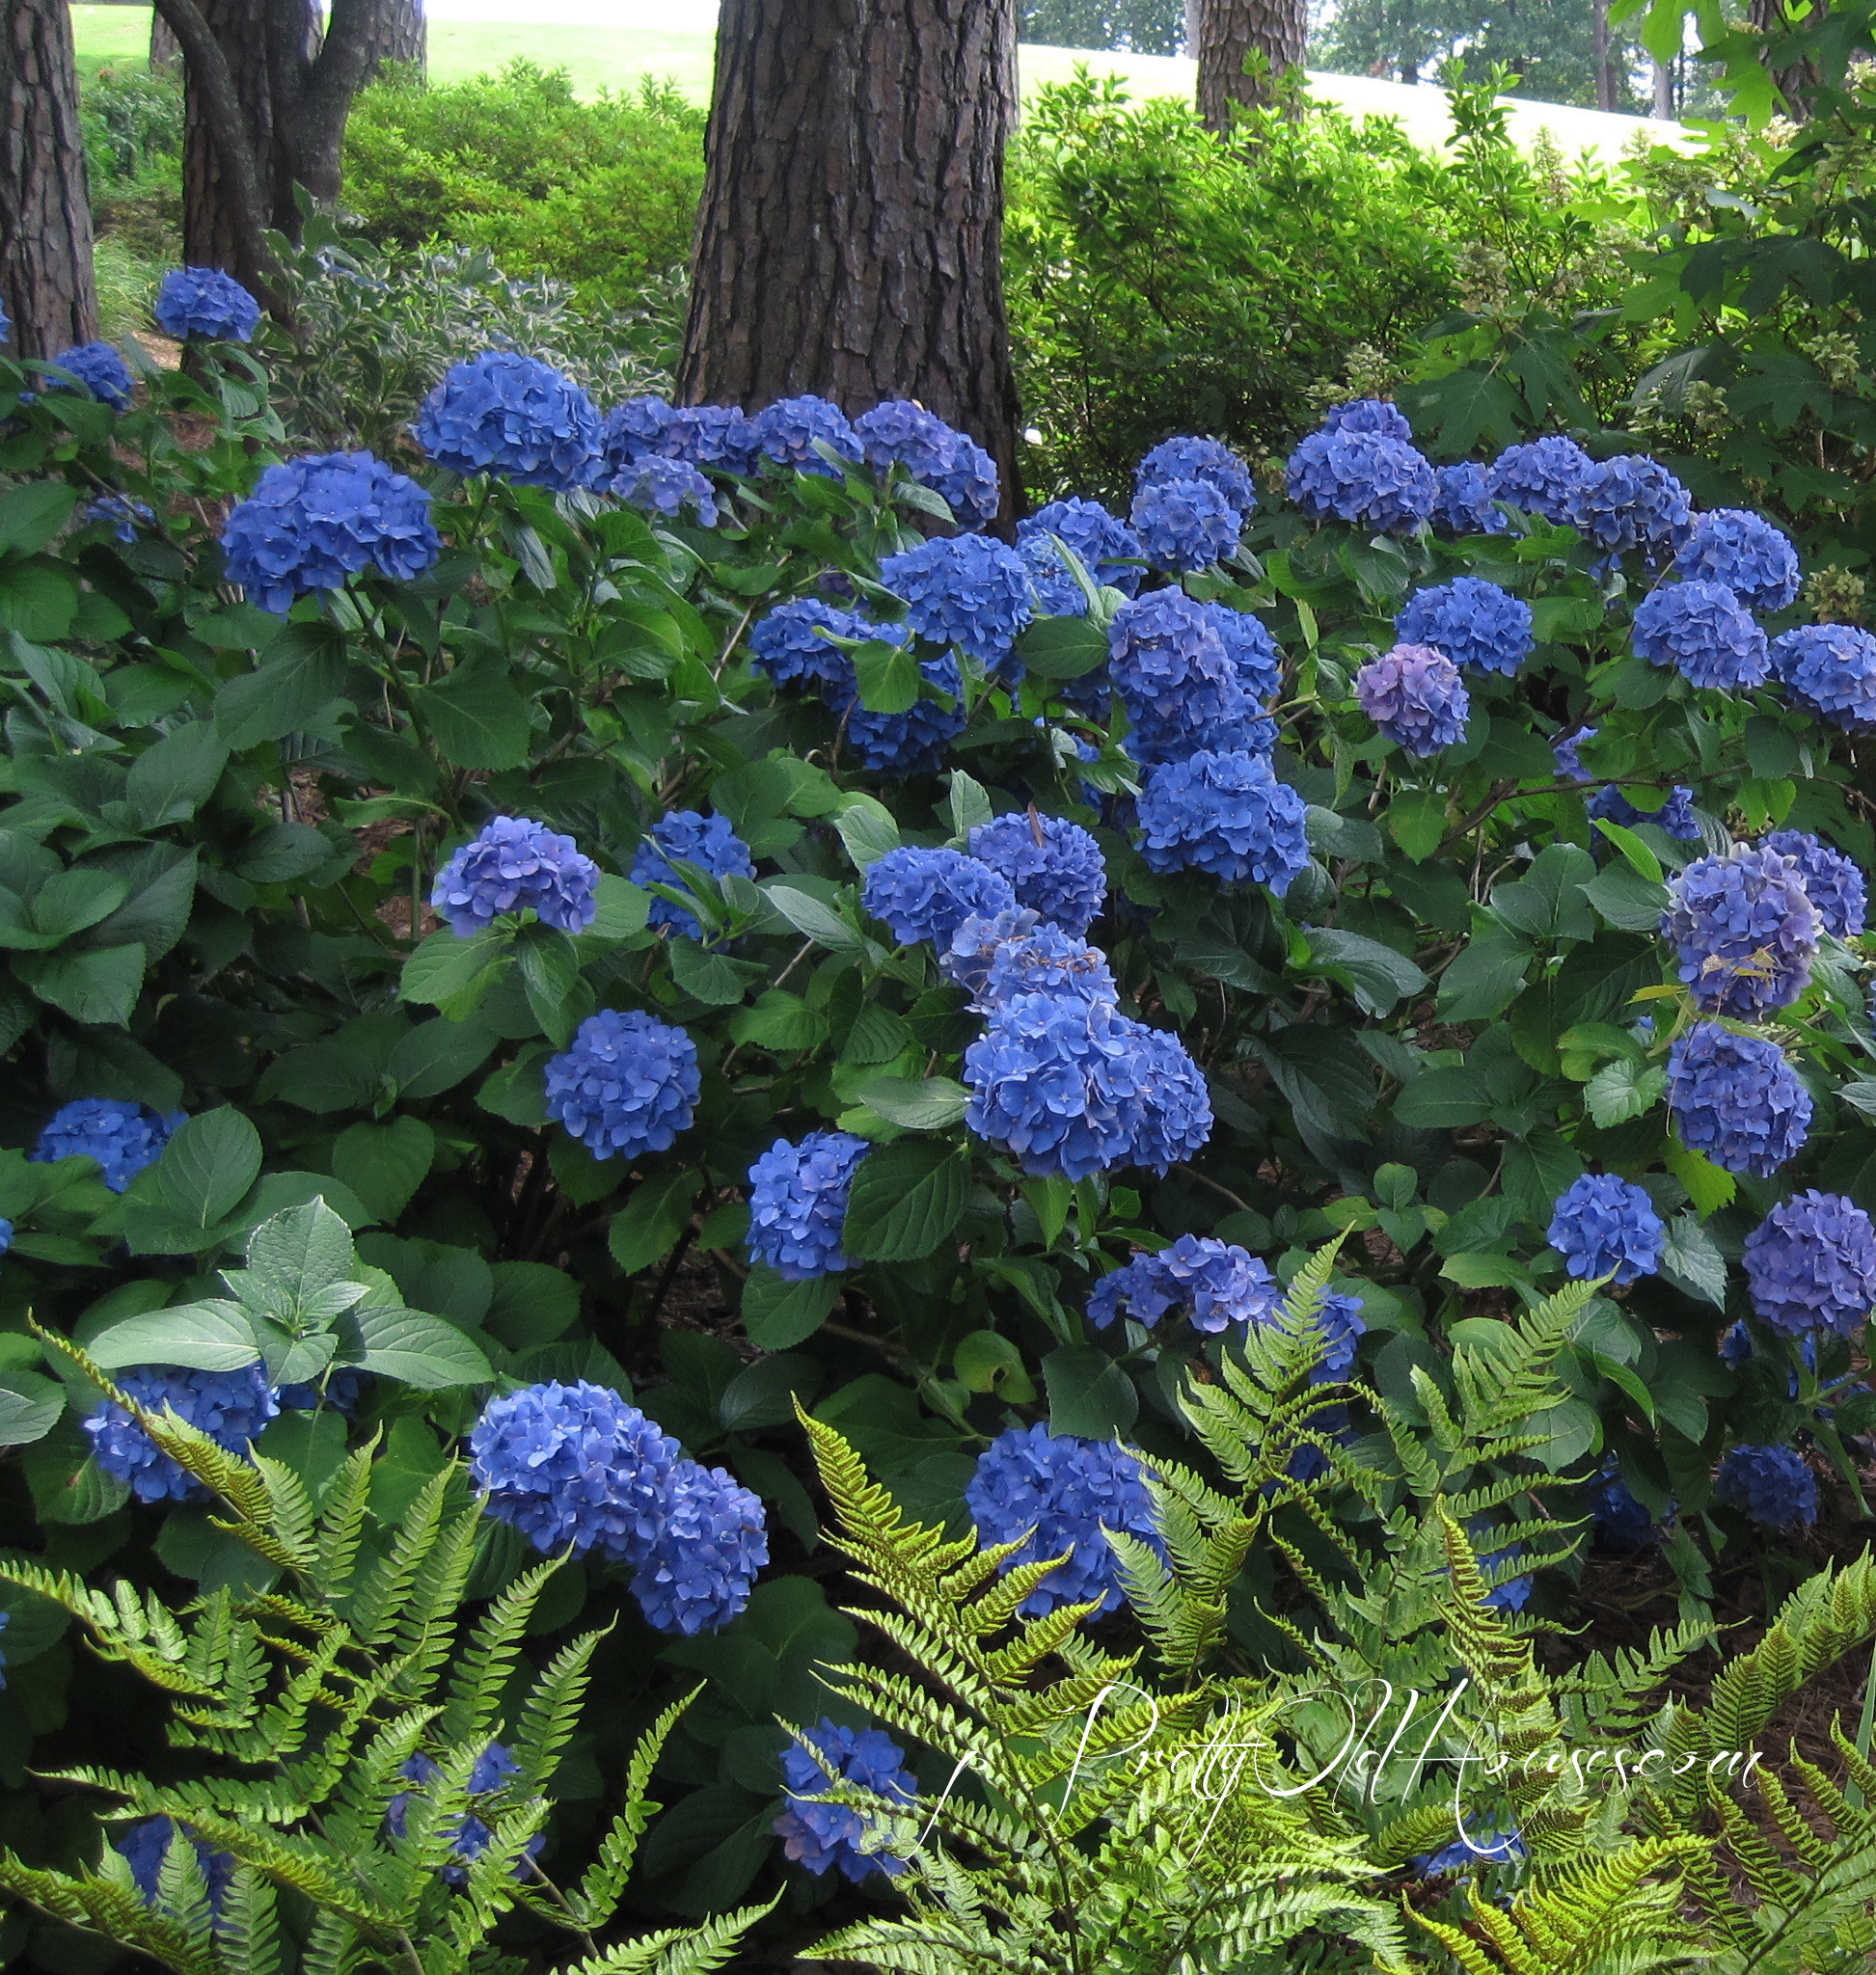 hydrangea macrophylla shrubs trees blue hydrangeas plants endless summer perennials visit companion